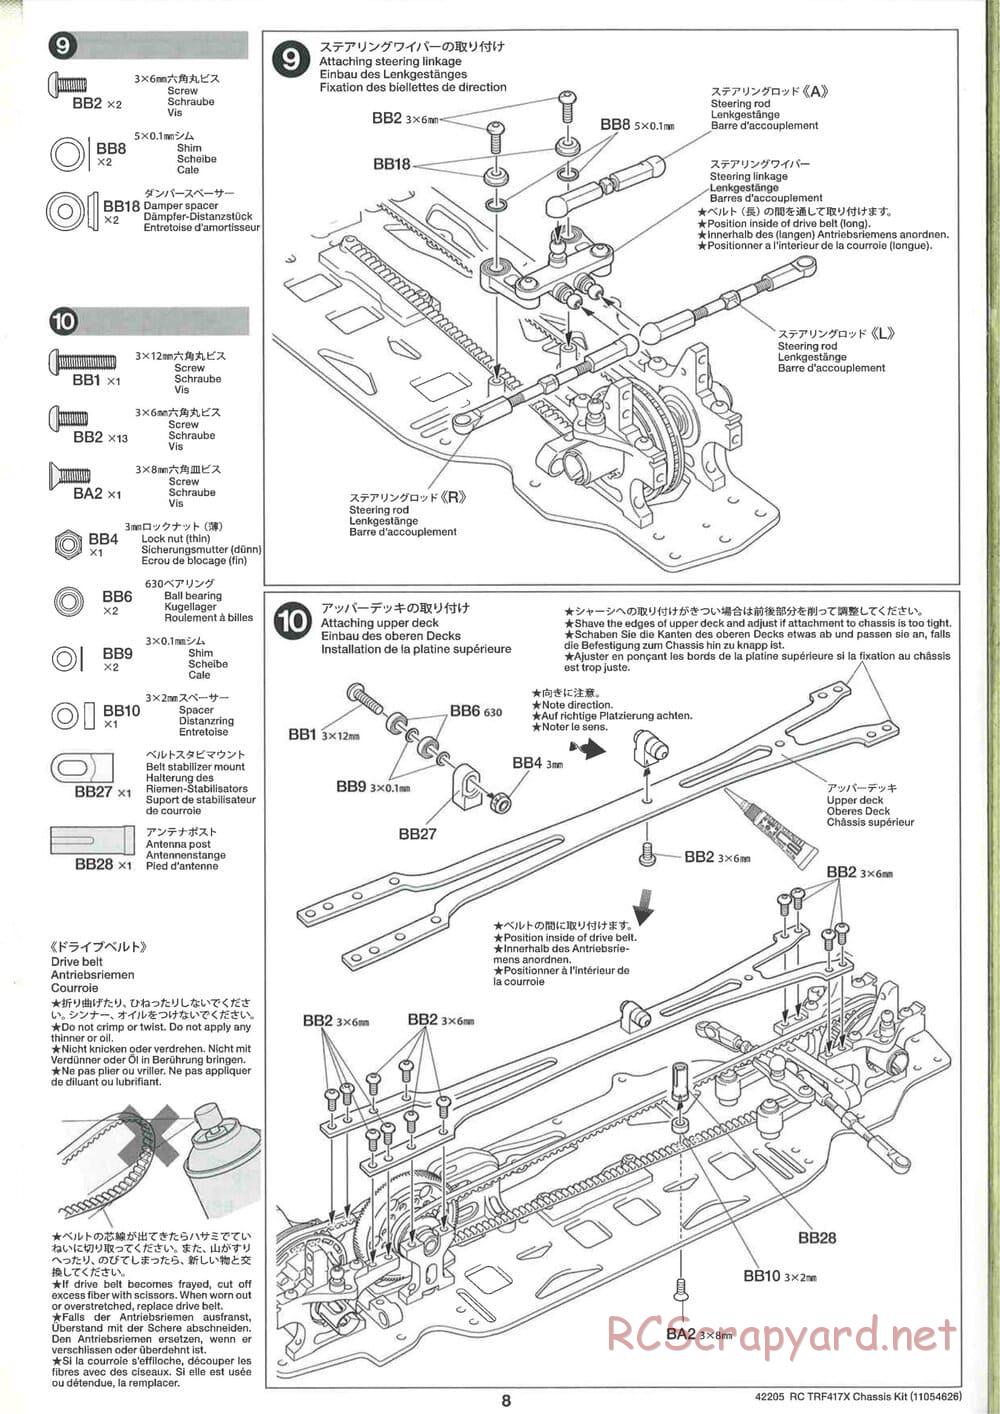 Tamiya - TRF417X Chassis - Manual - Page 8